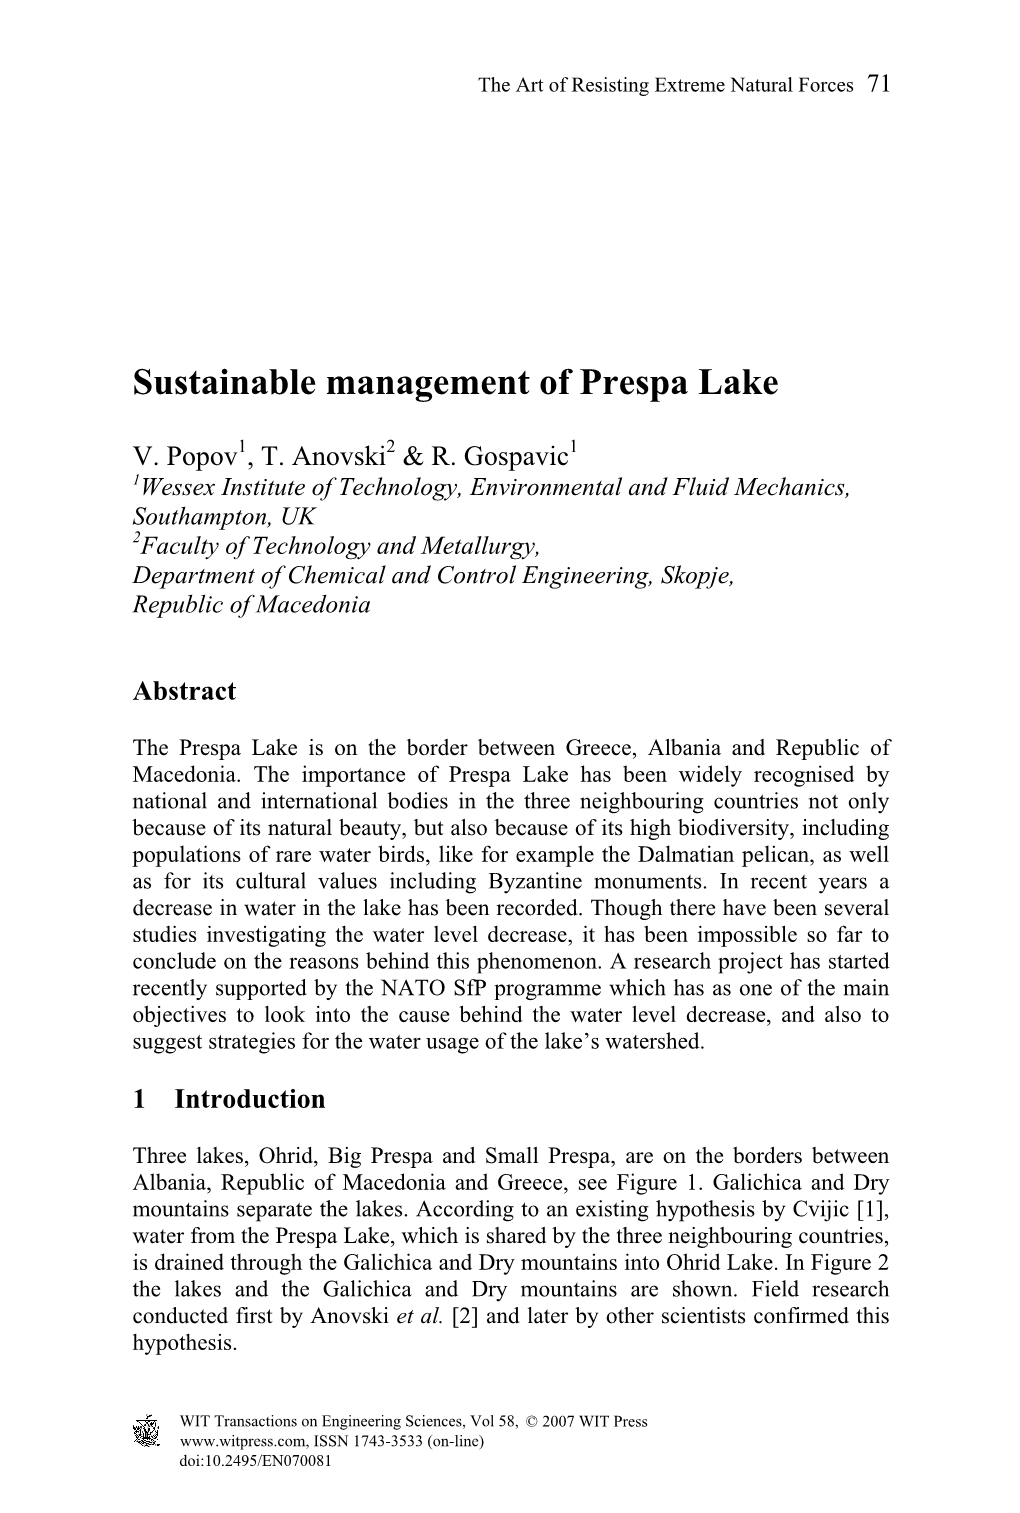 Sustainable Management of Prespa Lake